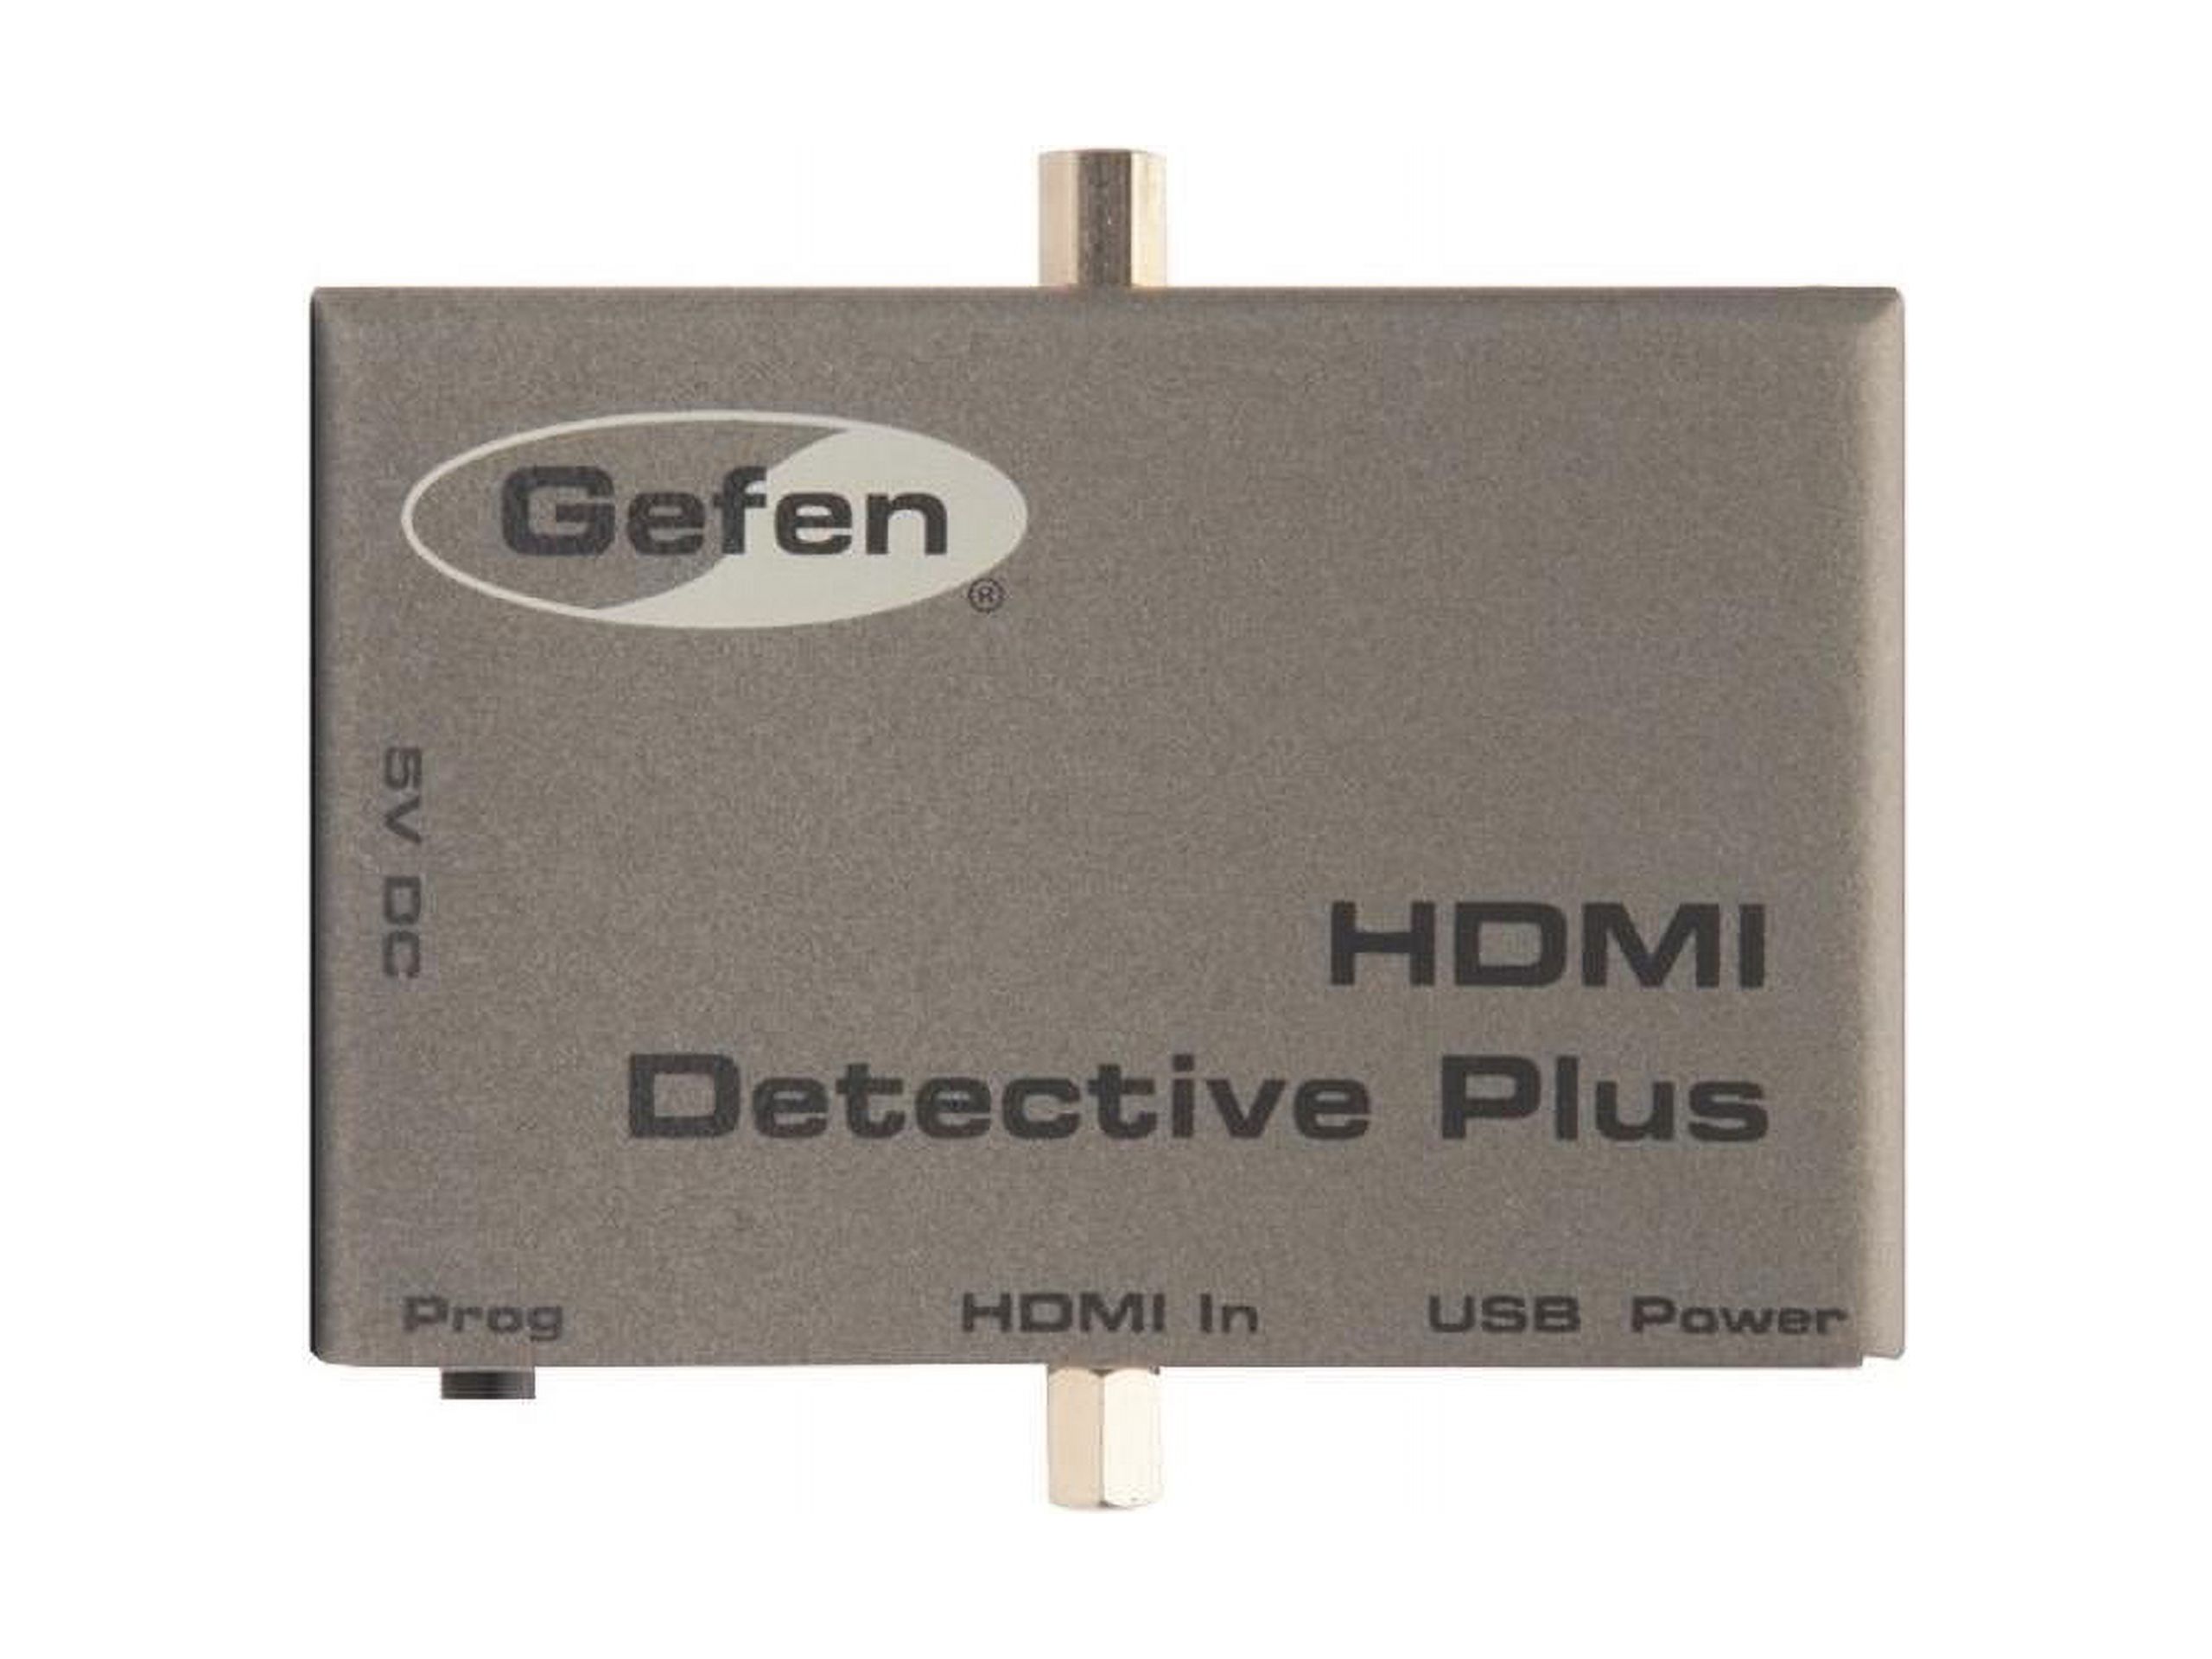 Gefen Hdmi Detective Plus - image 1 of 14